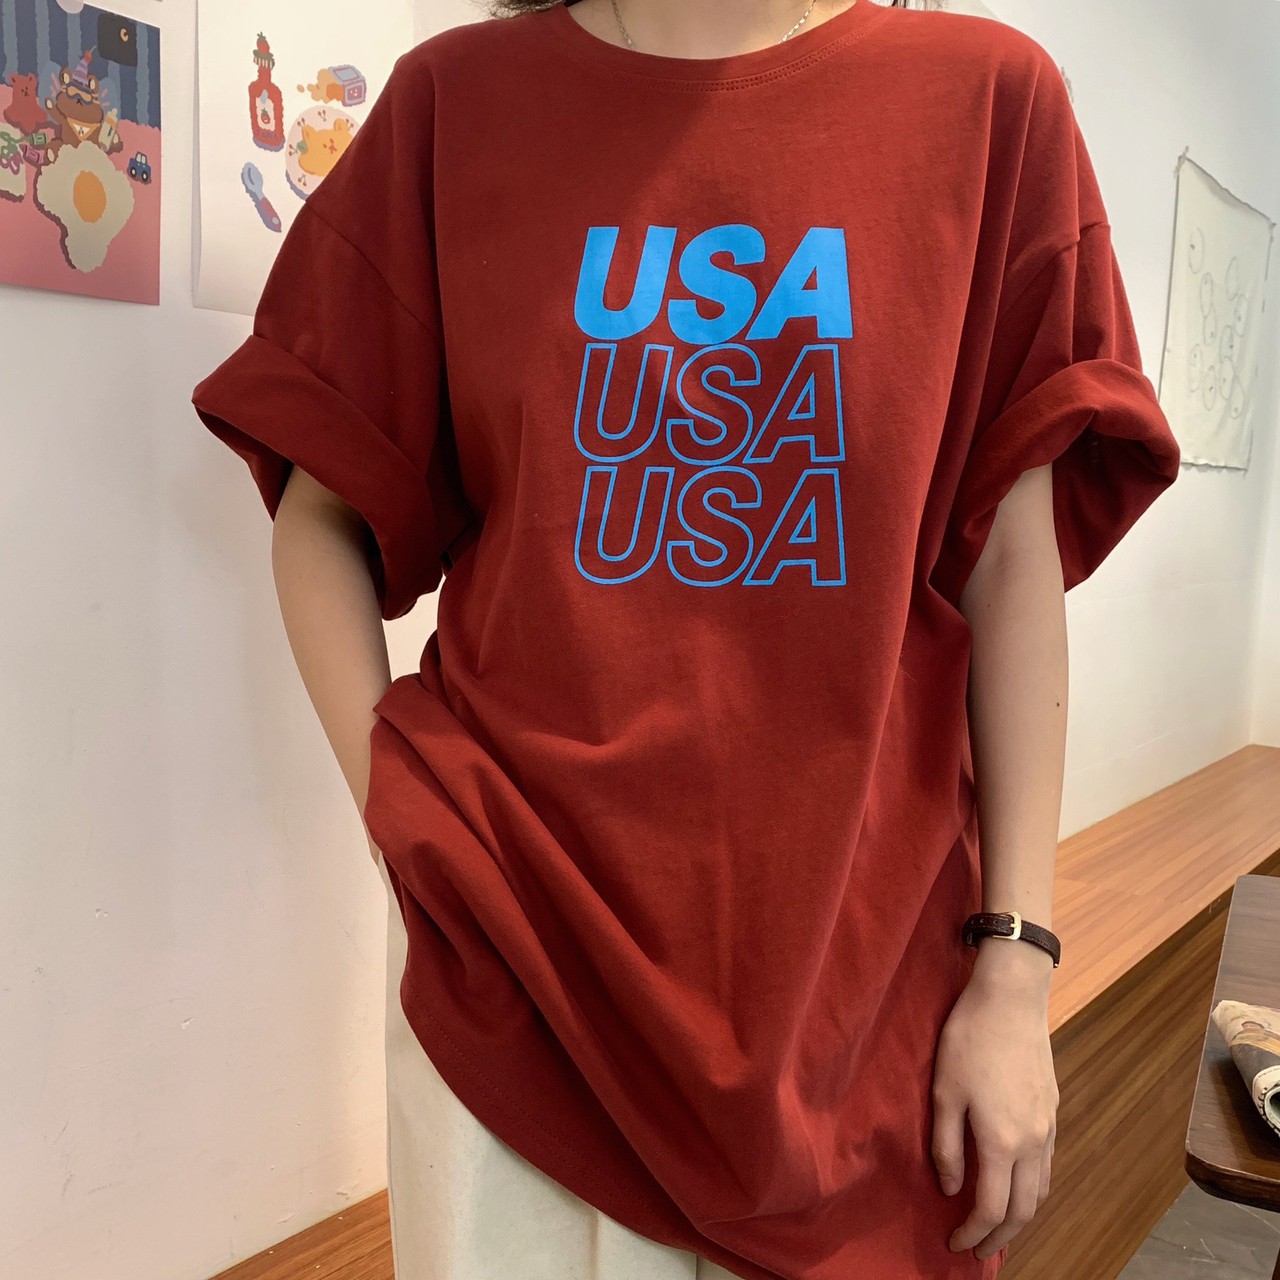 Fomu เสื้อยืดเกาหลี USA งานสกีนเริ่ด ผ้าคอนตอน เสื้อยืด โอเวอร์ไซส์ งานดีผ้าไม่บาง ใส่สบาย A015